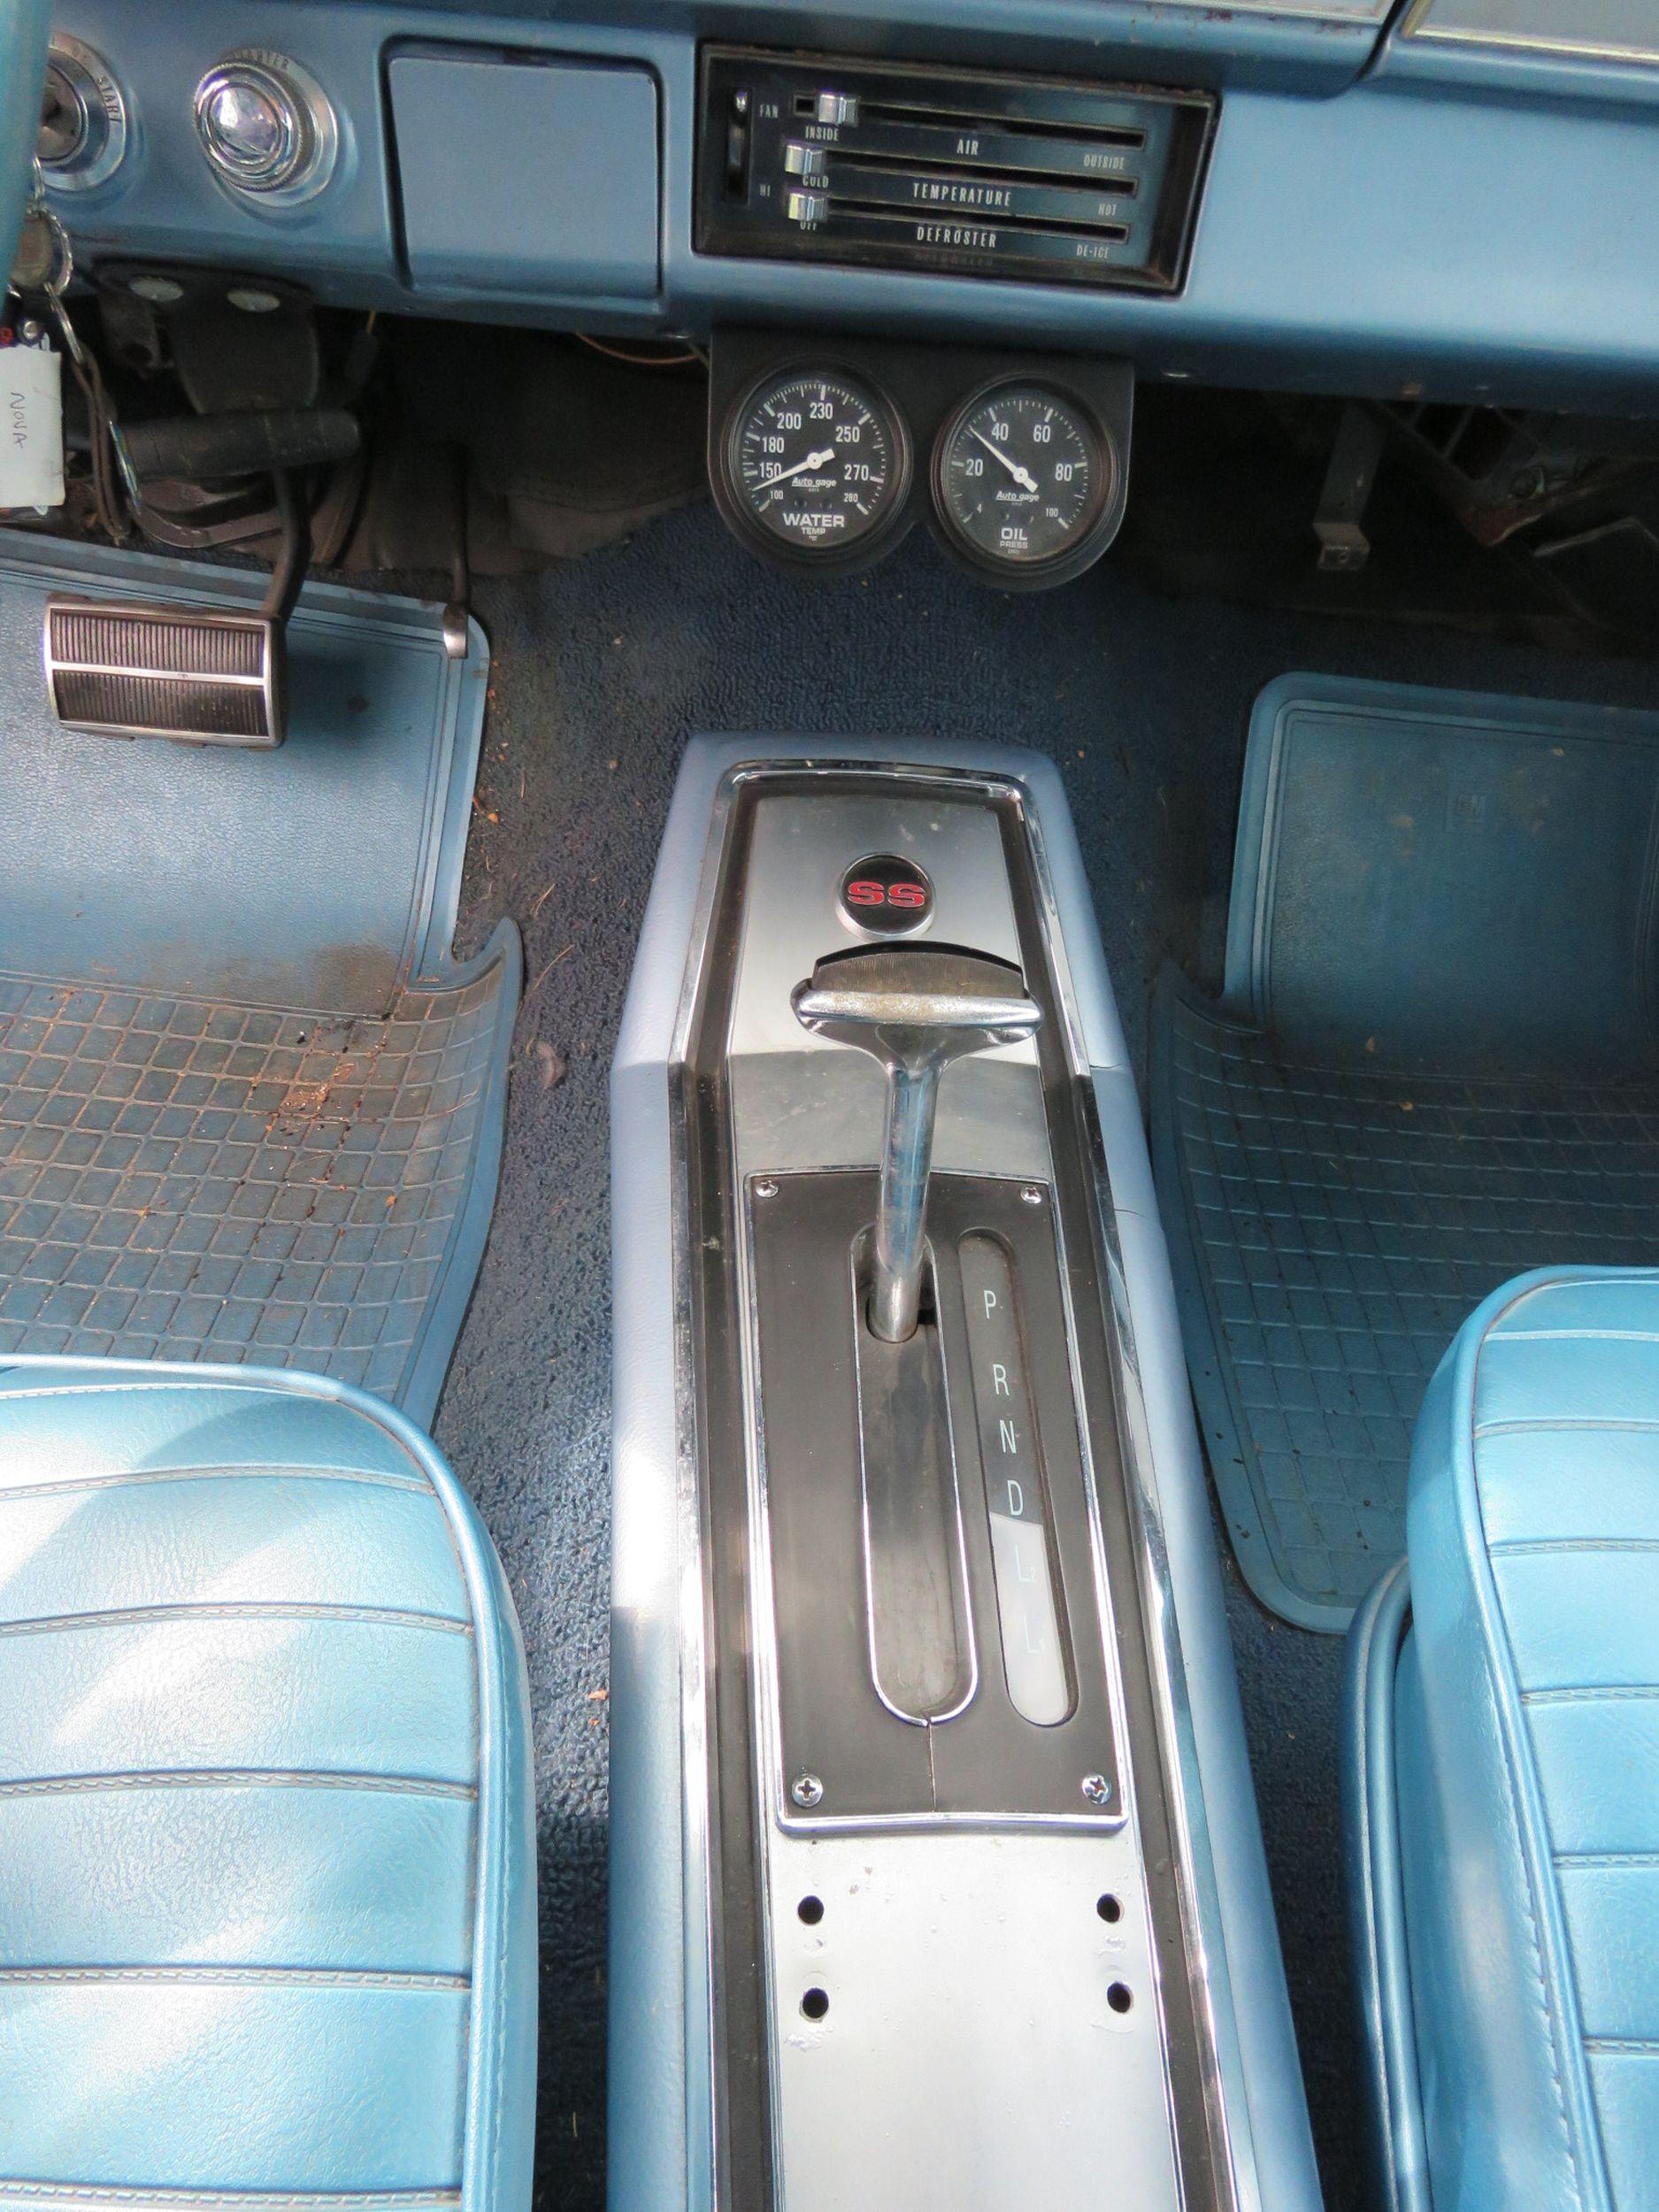 1967 Chevrolet Nova SS Coupe